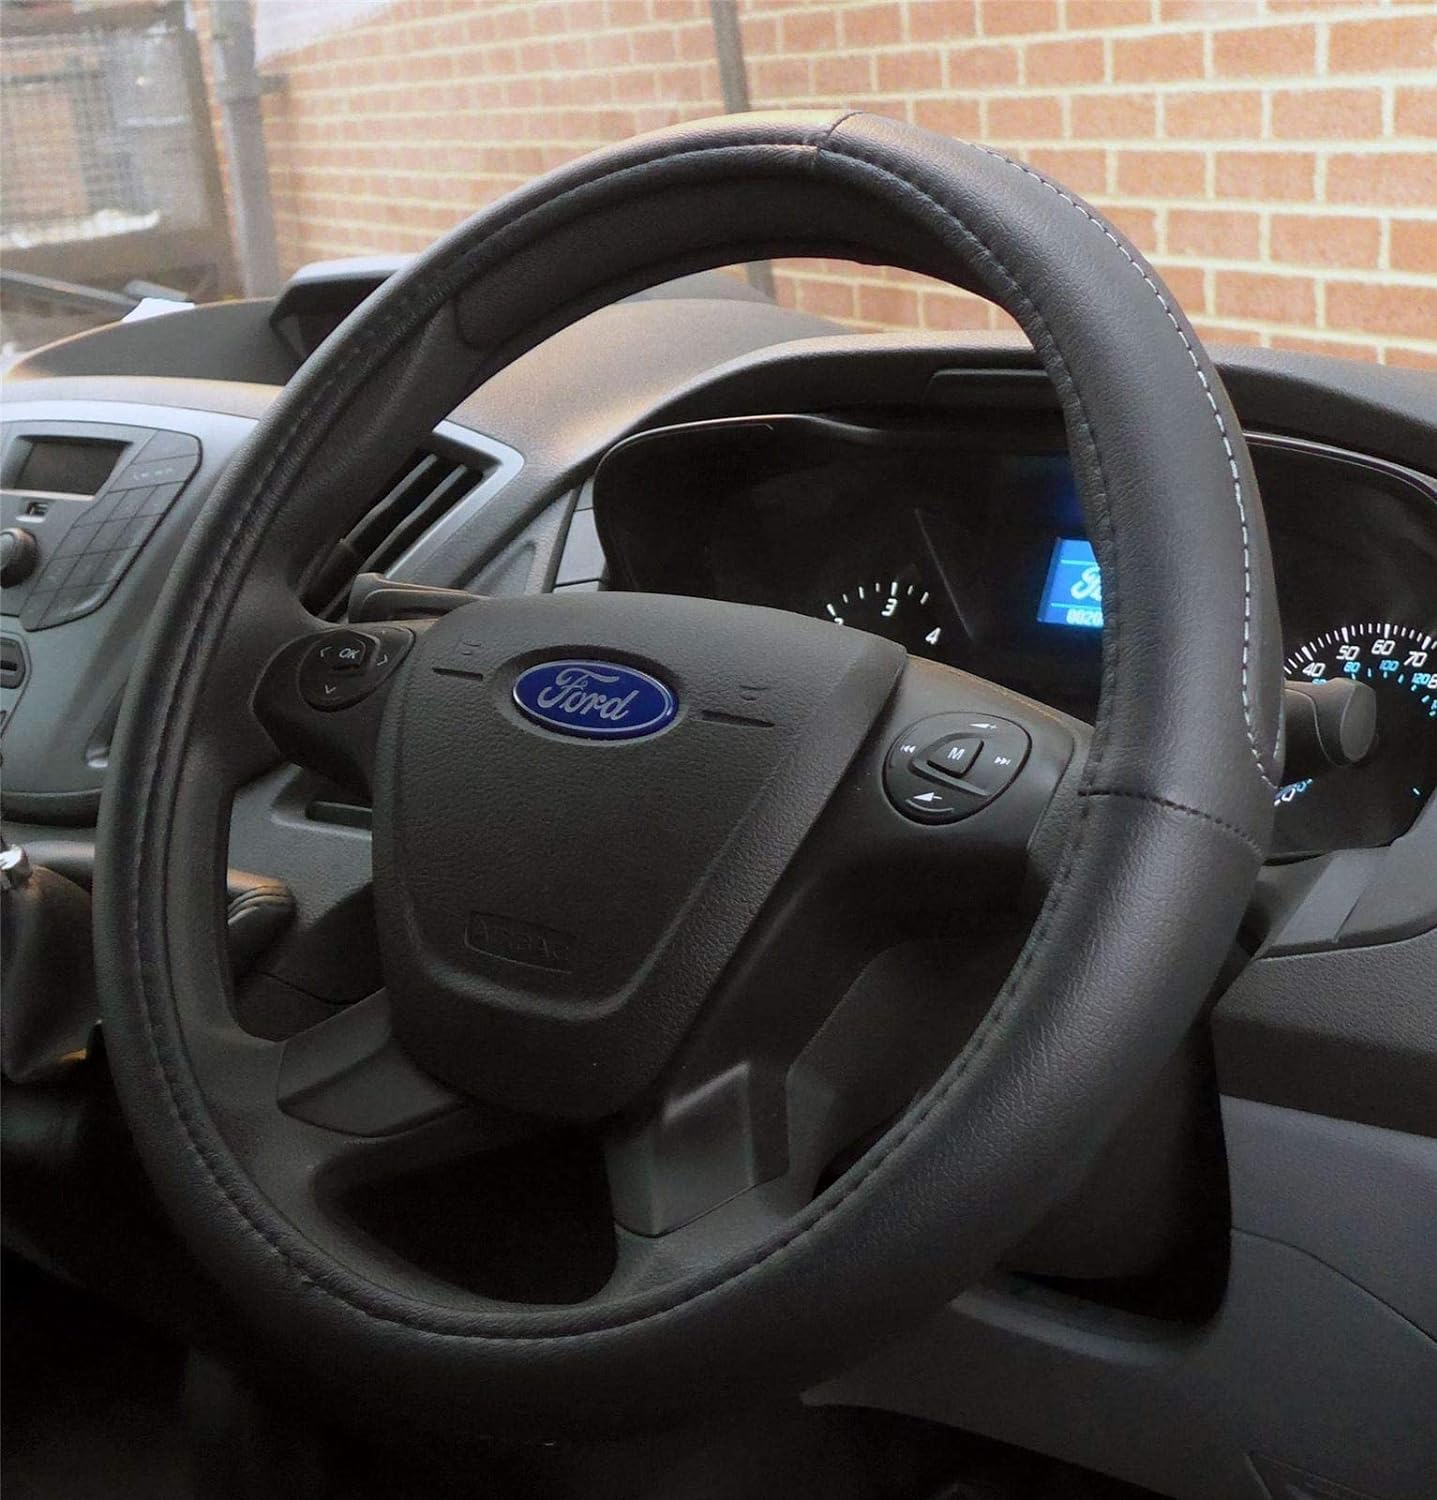 UKB4C Steering Wheel Cover Grip Leatherette 'Leather Look' Steering Wheel Glove - 37-39cm Black Universal Fit for Cars, Vans, SUVs, 4x4s